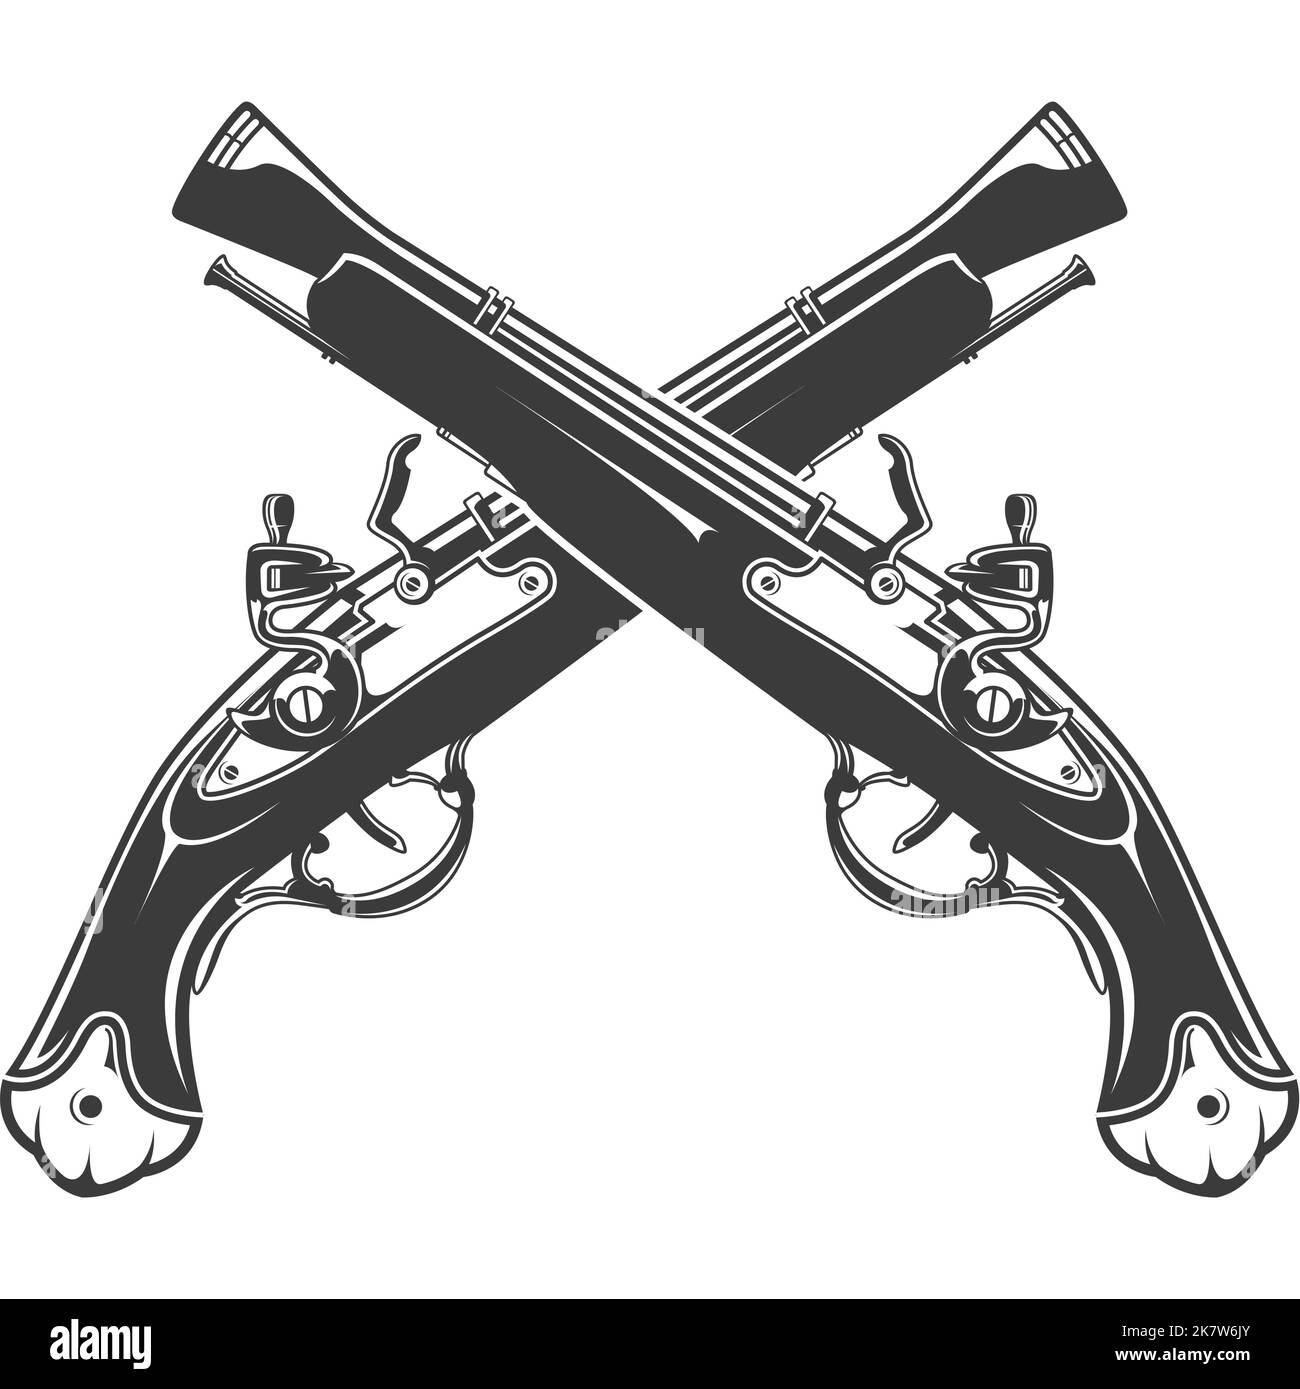 Old pirate firelock musket, two vintage pistols, crossed guns emblem, vector Stock Vector